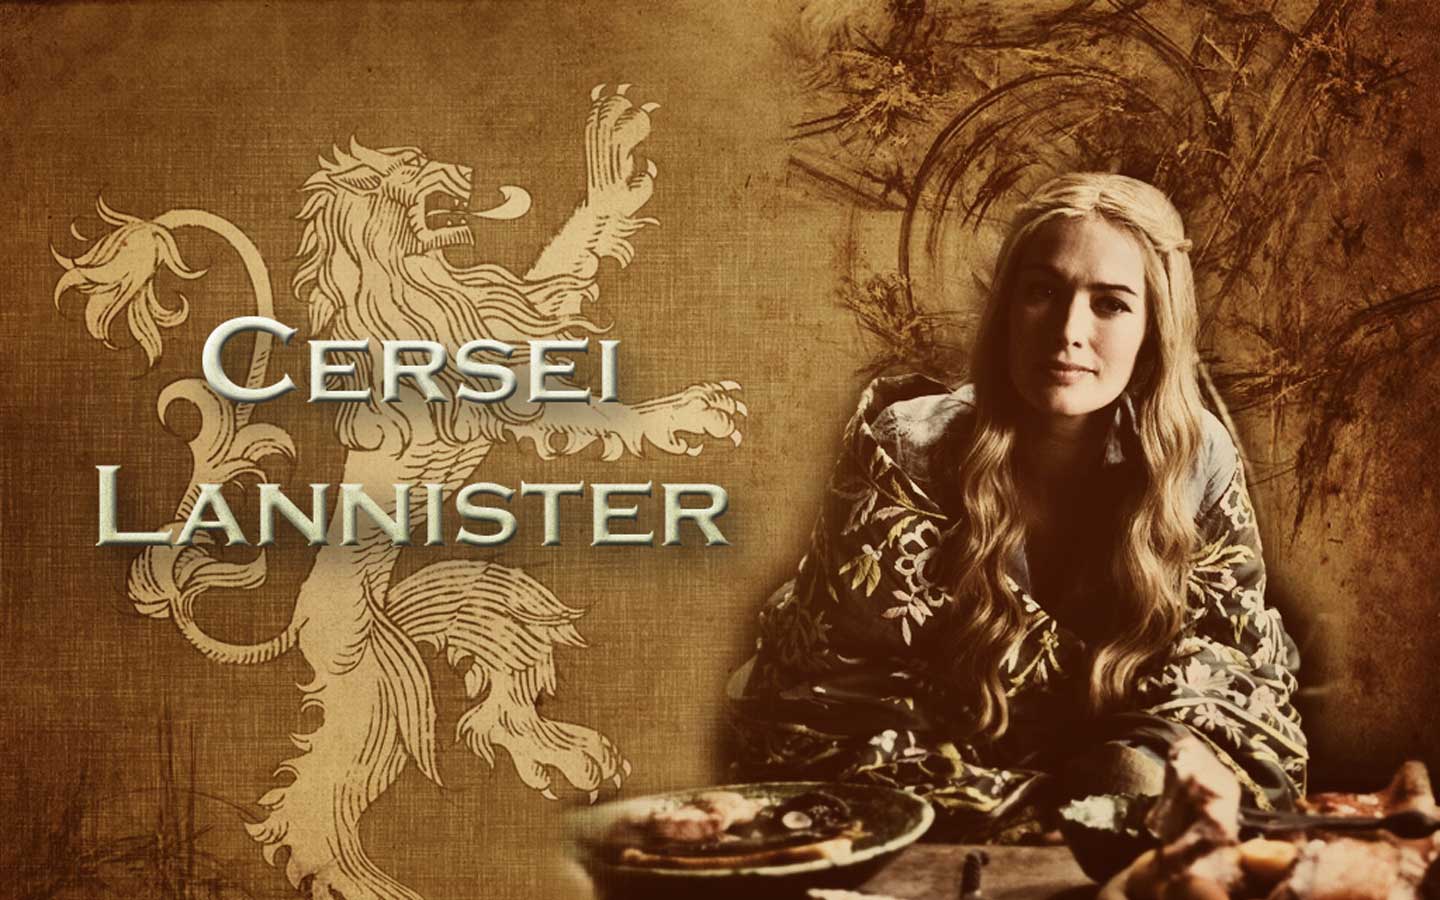 Cersei Lannister - Cersei Lannister Wallpaper (25774069) - Fanpop